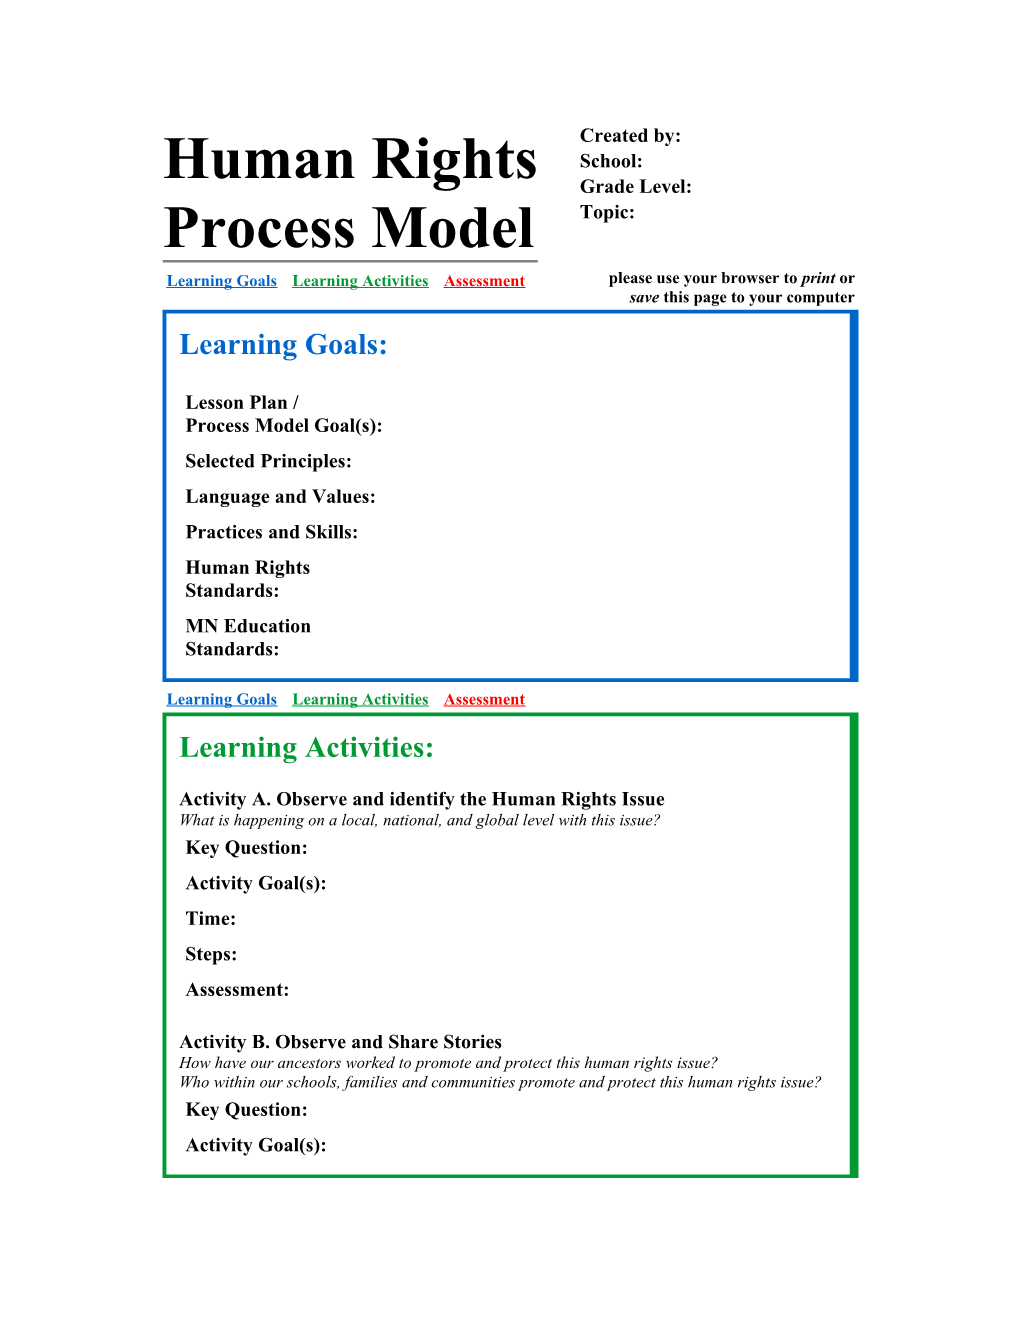 Human Rights Process Model - Print Page